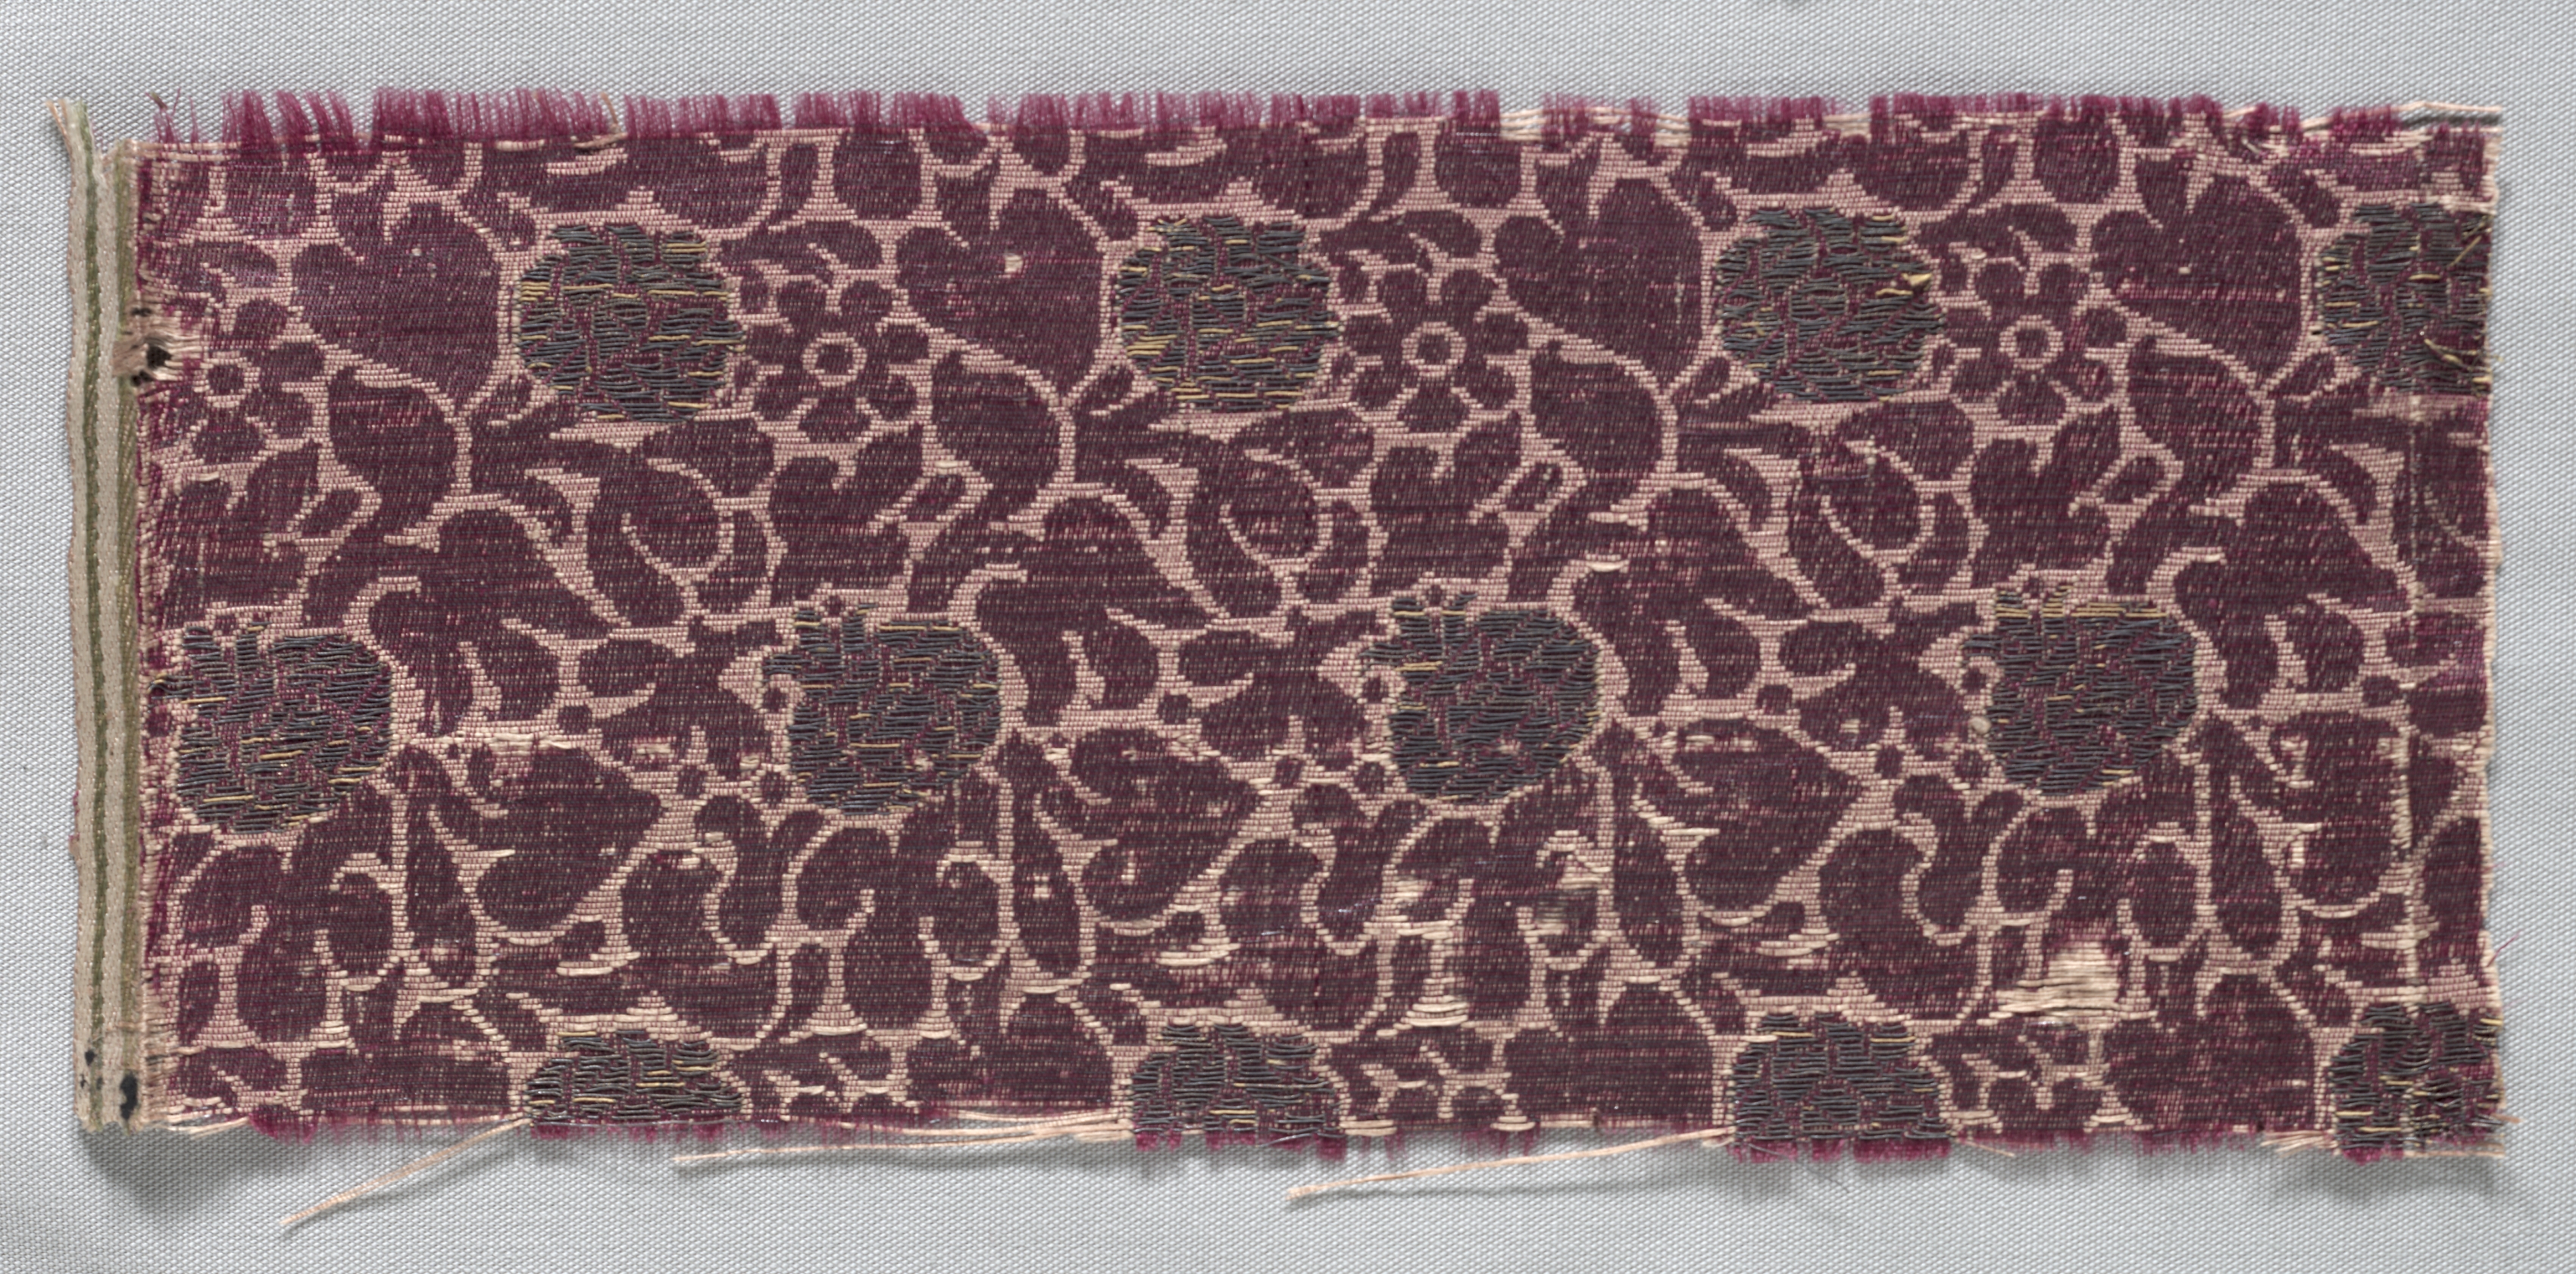 Brocaded Textile Fragment